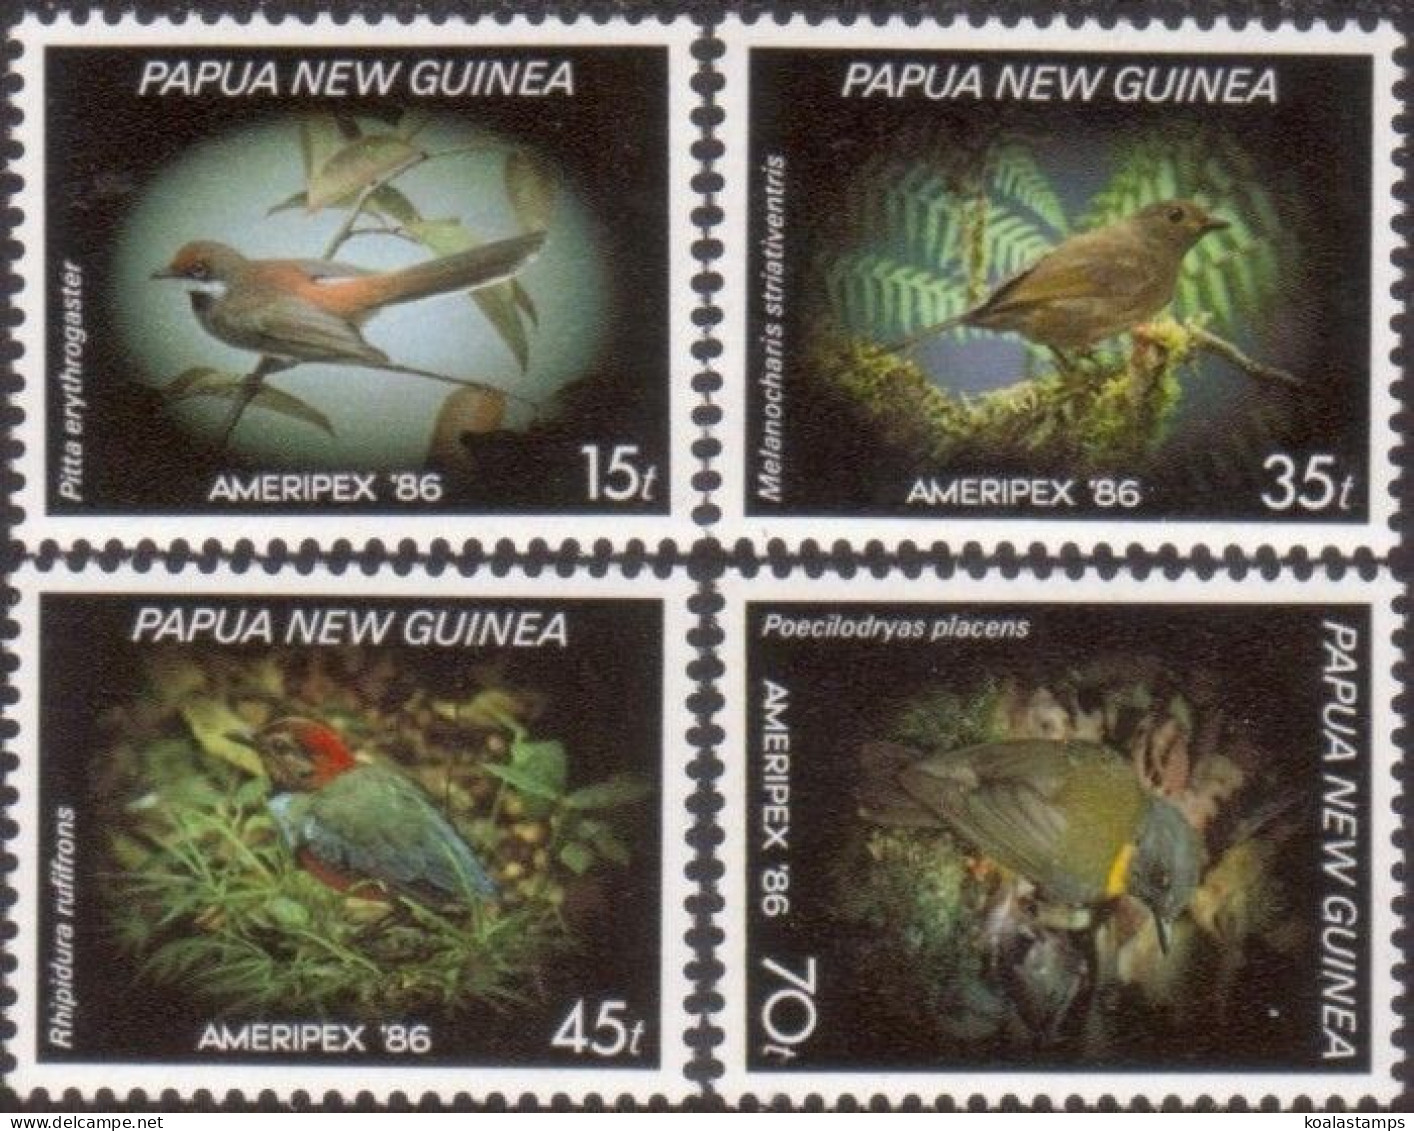 Papua New Guinea 1986 SG525 Small Birds Ameripex '86 Set MNH - Papua-Neuguinea